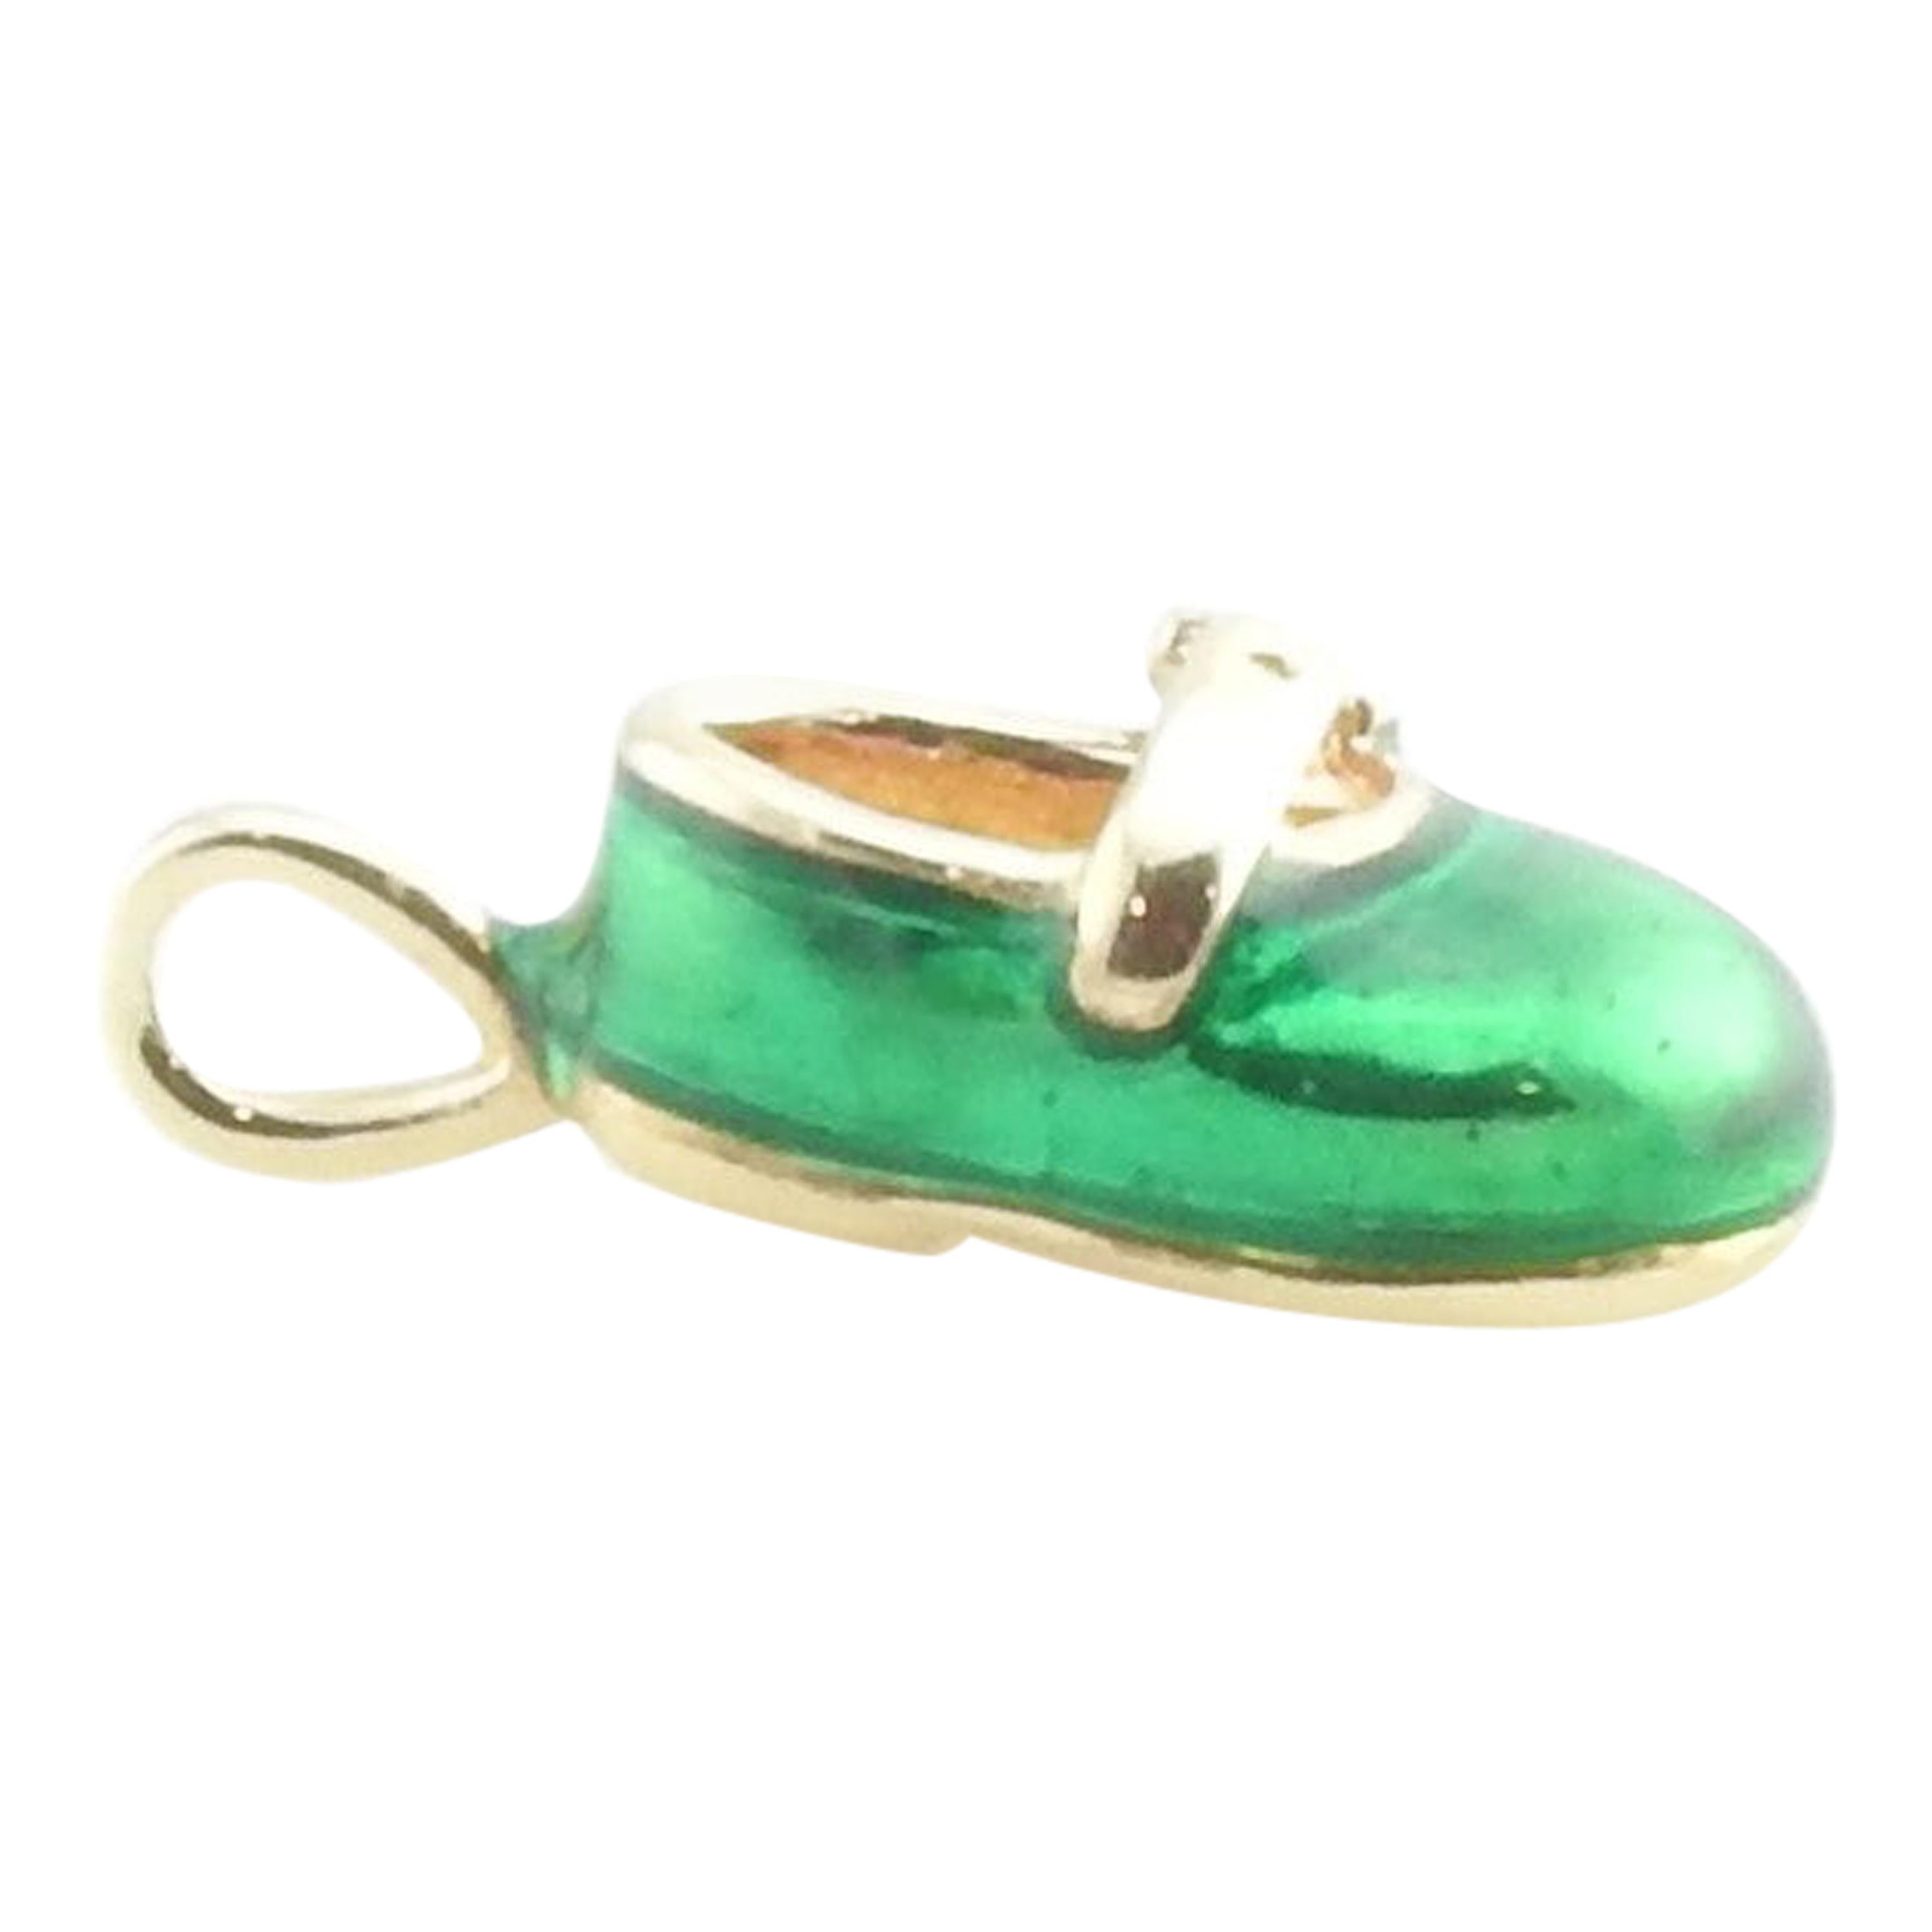 10 Karat Yellow Gold and Green Enamel Baby Shoe Charm